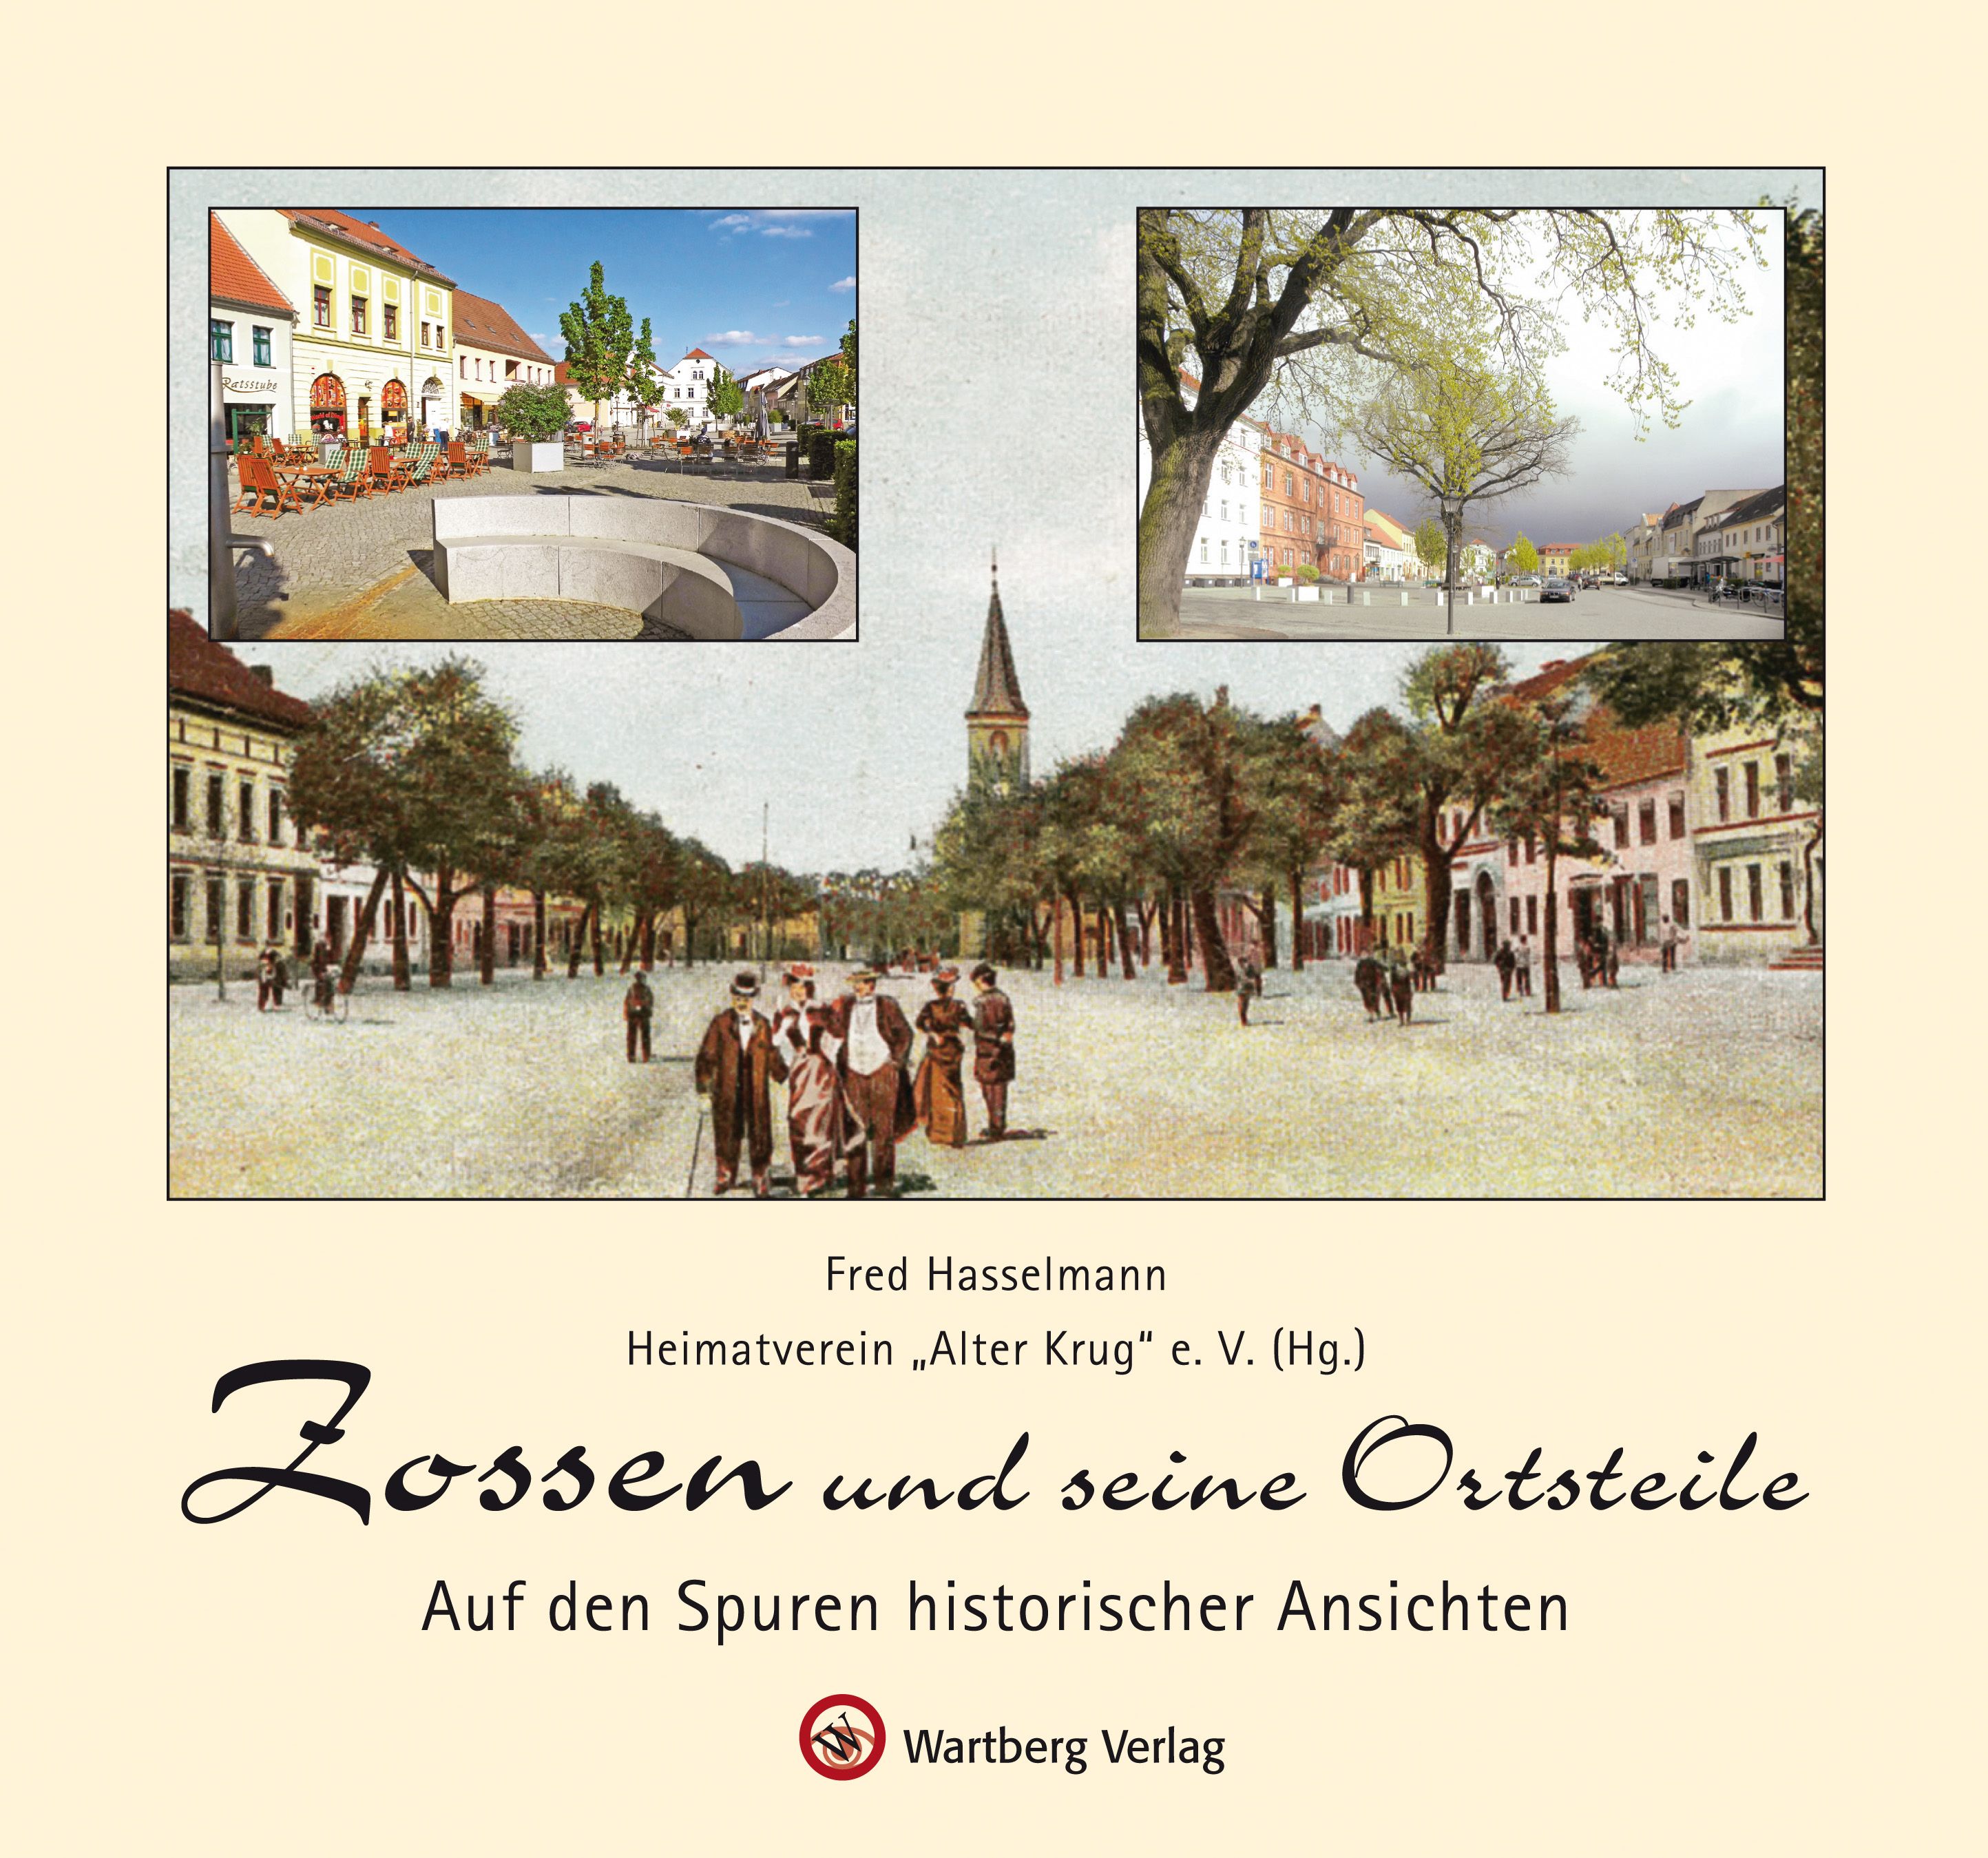 2014 11 01 Hasselmann Zossen